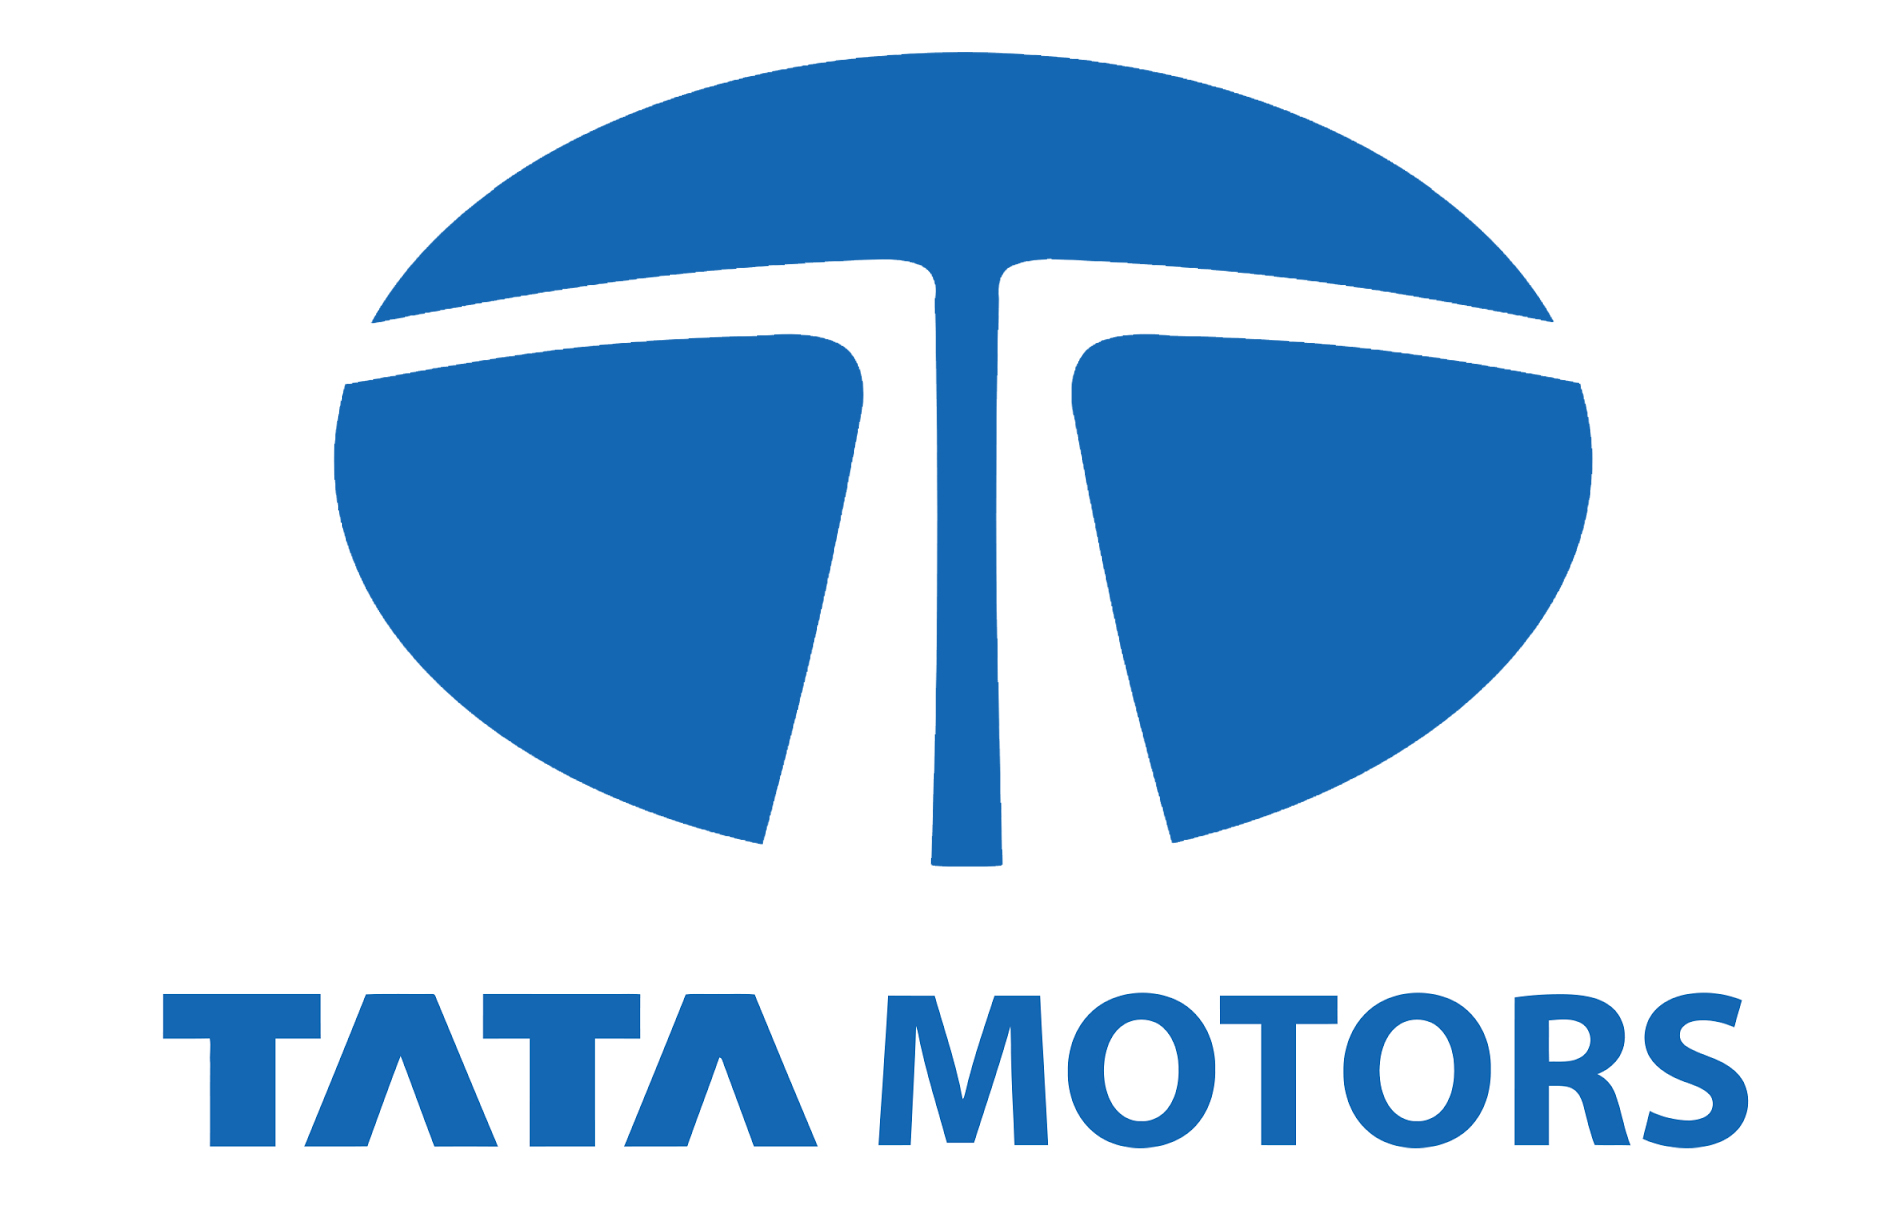 TaTa Motors Cars Showroom Frontier Motocorp Shahdol Logo